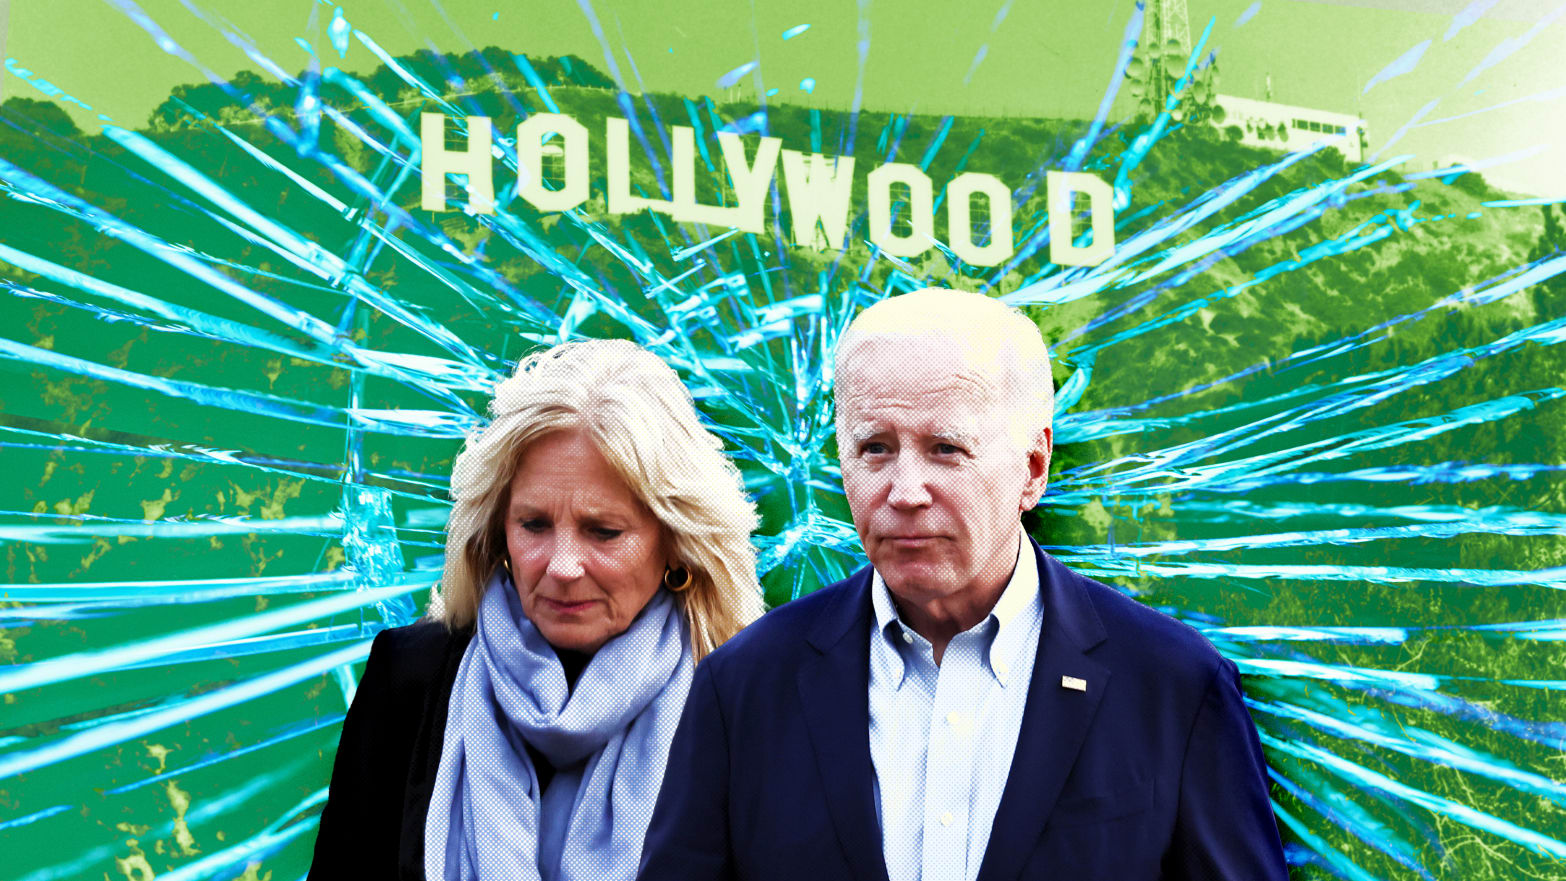 A photo illustration of Jill Biden, President Joe Biden, and the Hollywood sign.